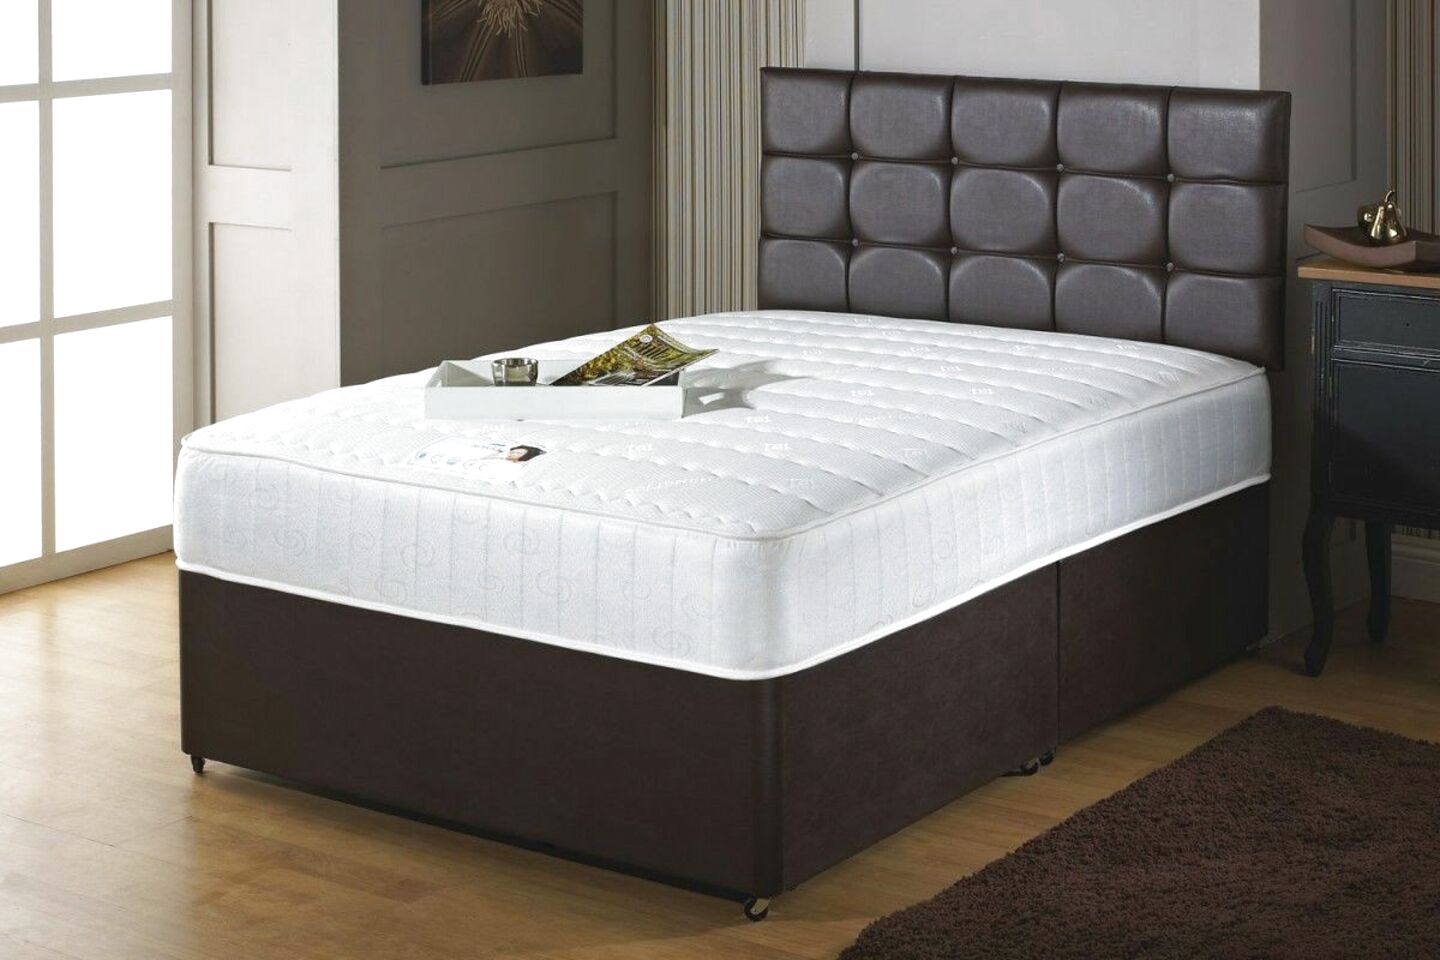 mattress 140 x 70 sale